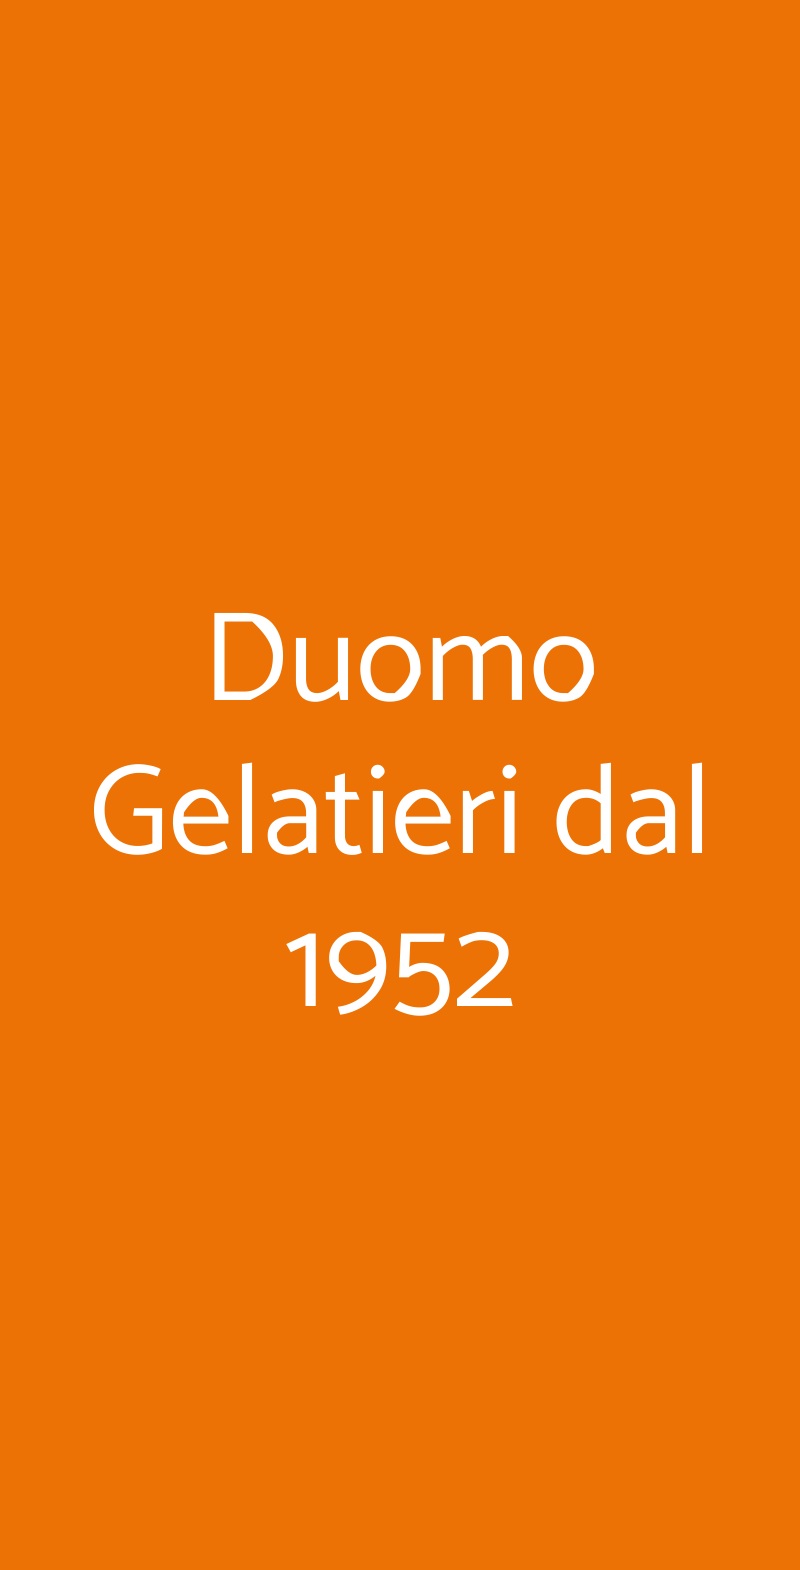 Duomo Gelatieri dal 1952 Cefalù menù 1 pagina